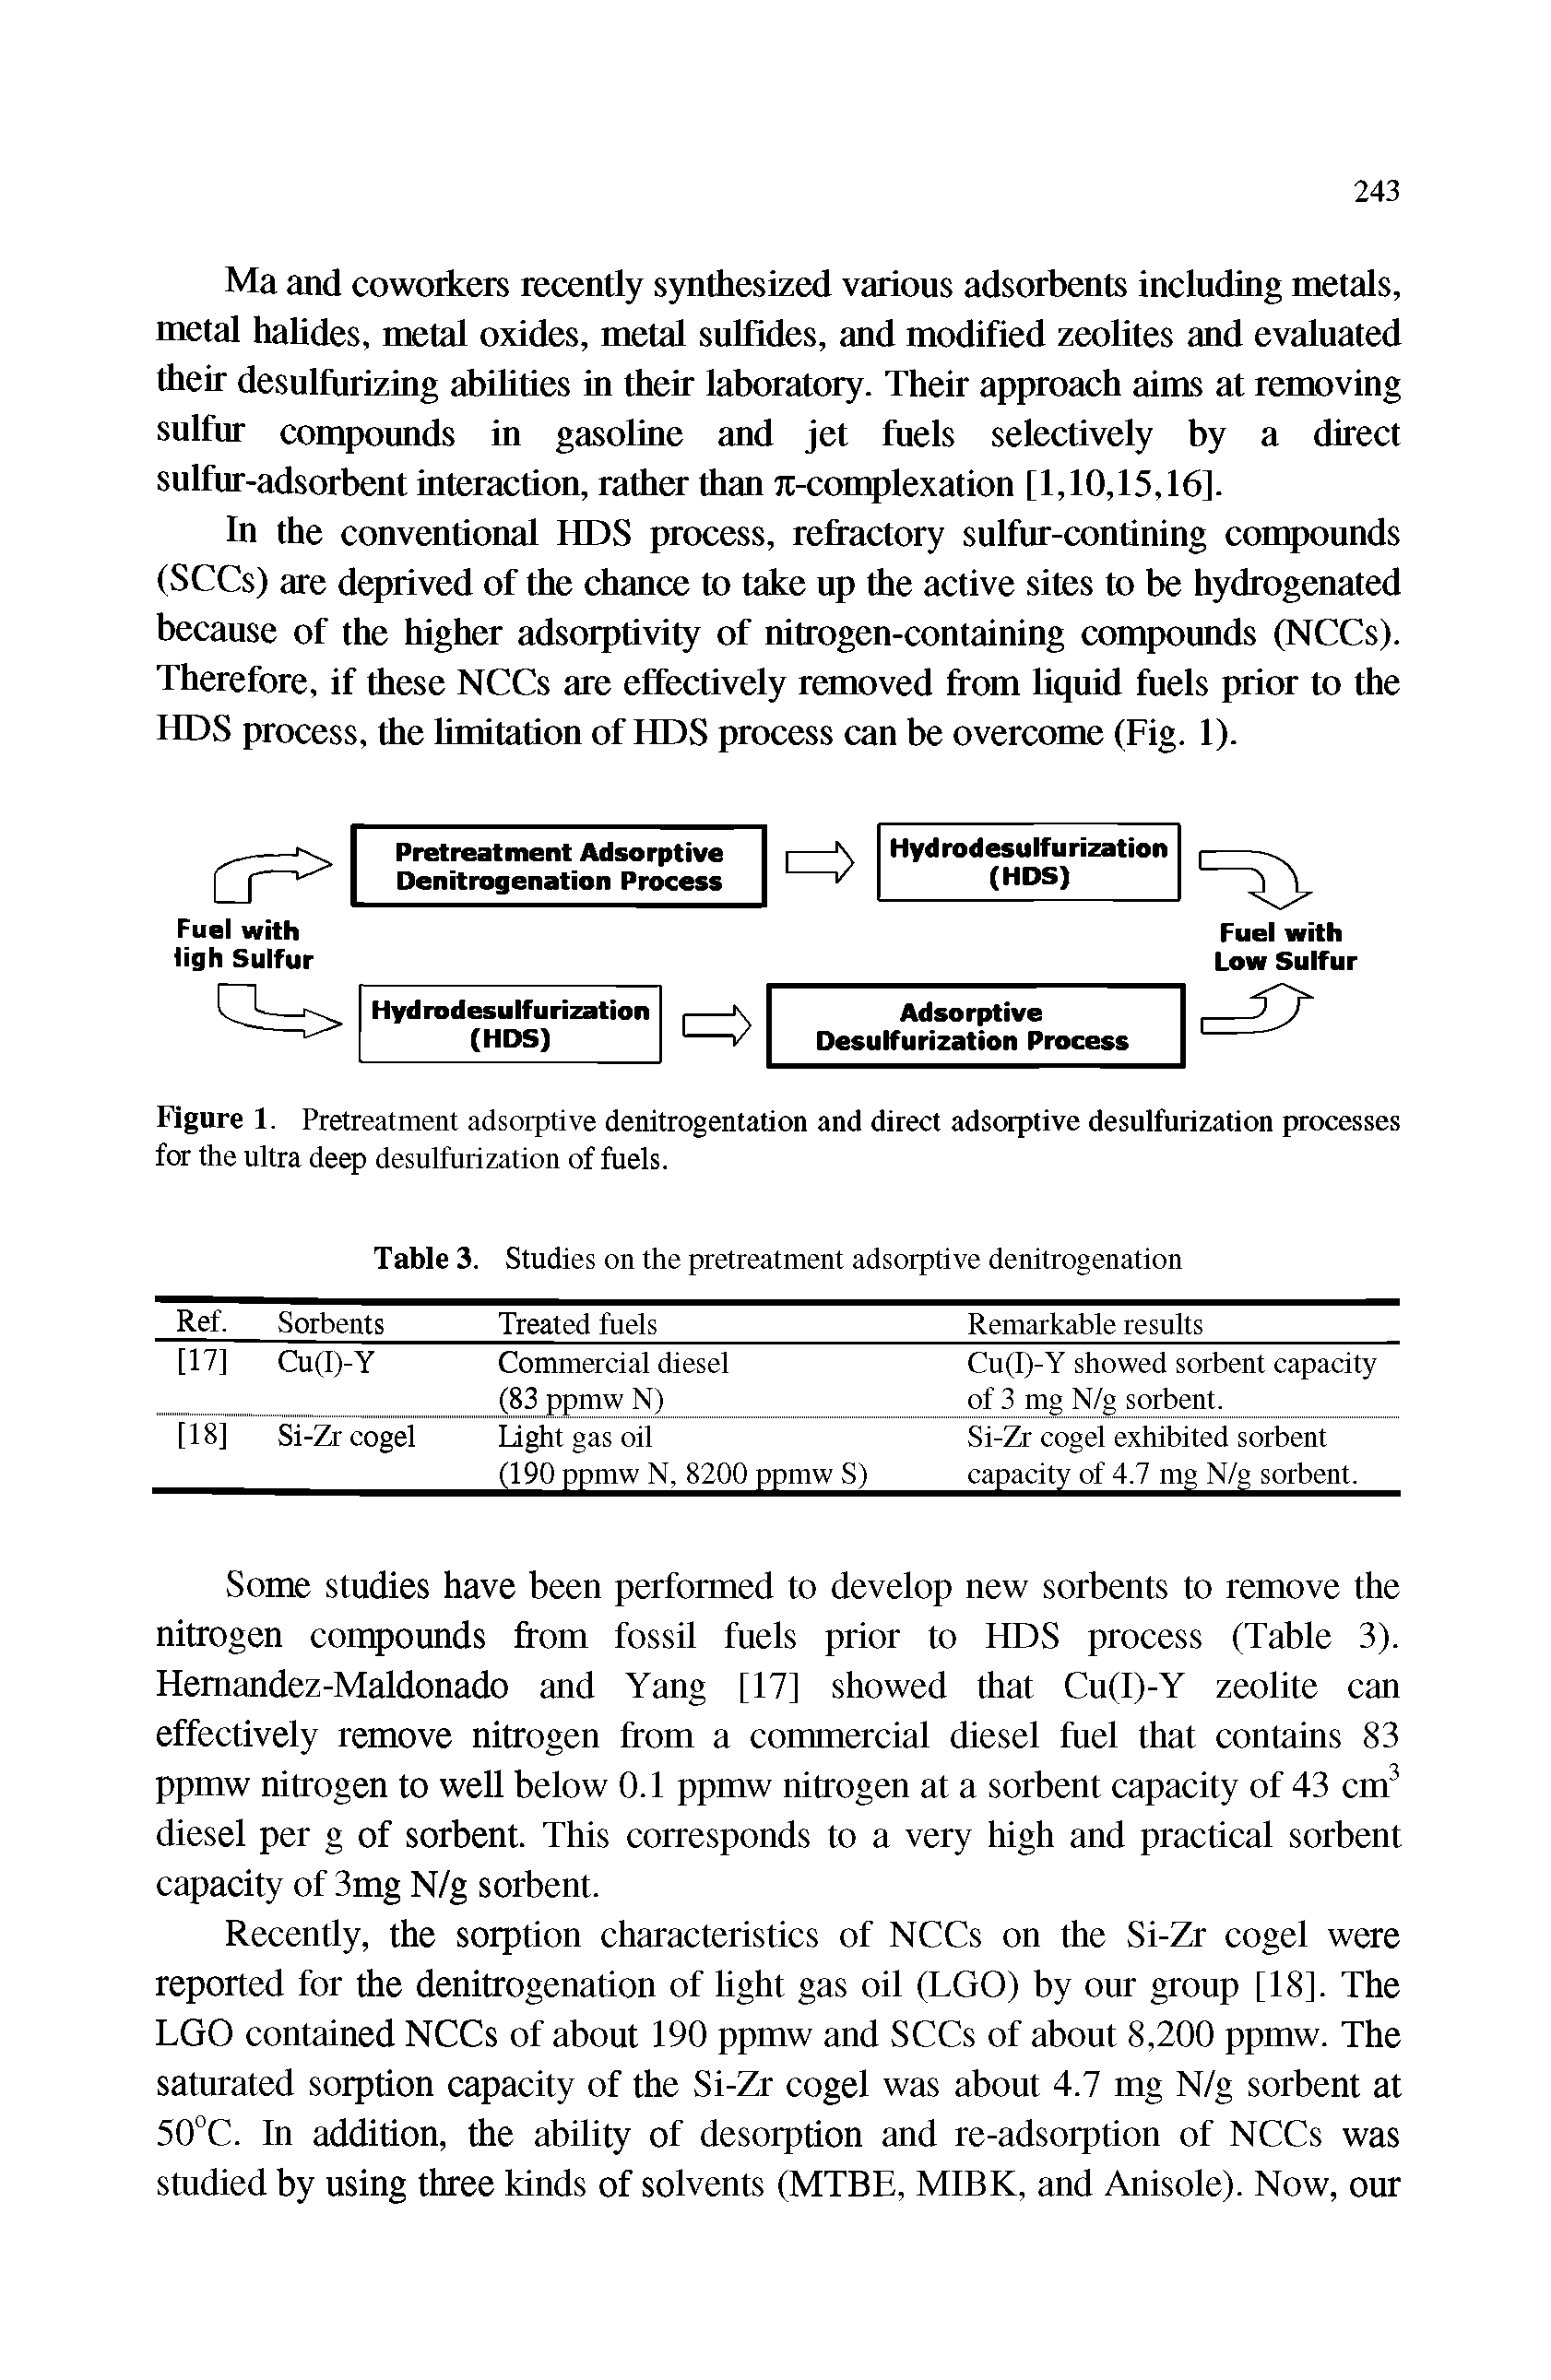 Figure 1. Pretreatment adsorptive denitrogentation and direct adsorptive desuifurization processes for the ultra deep desulfurization of fuels.